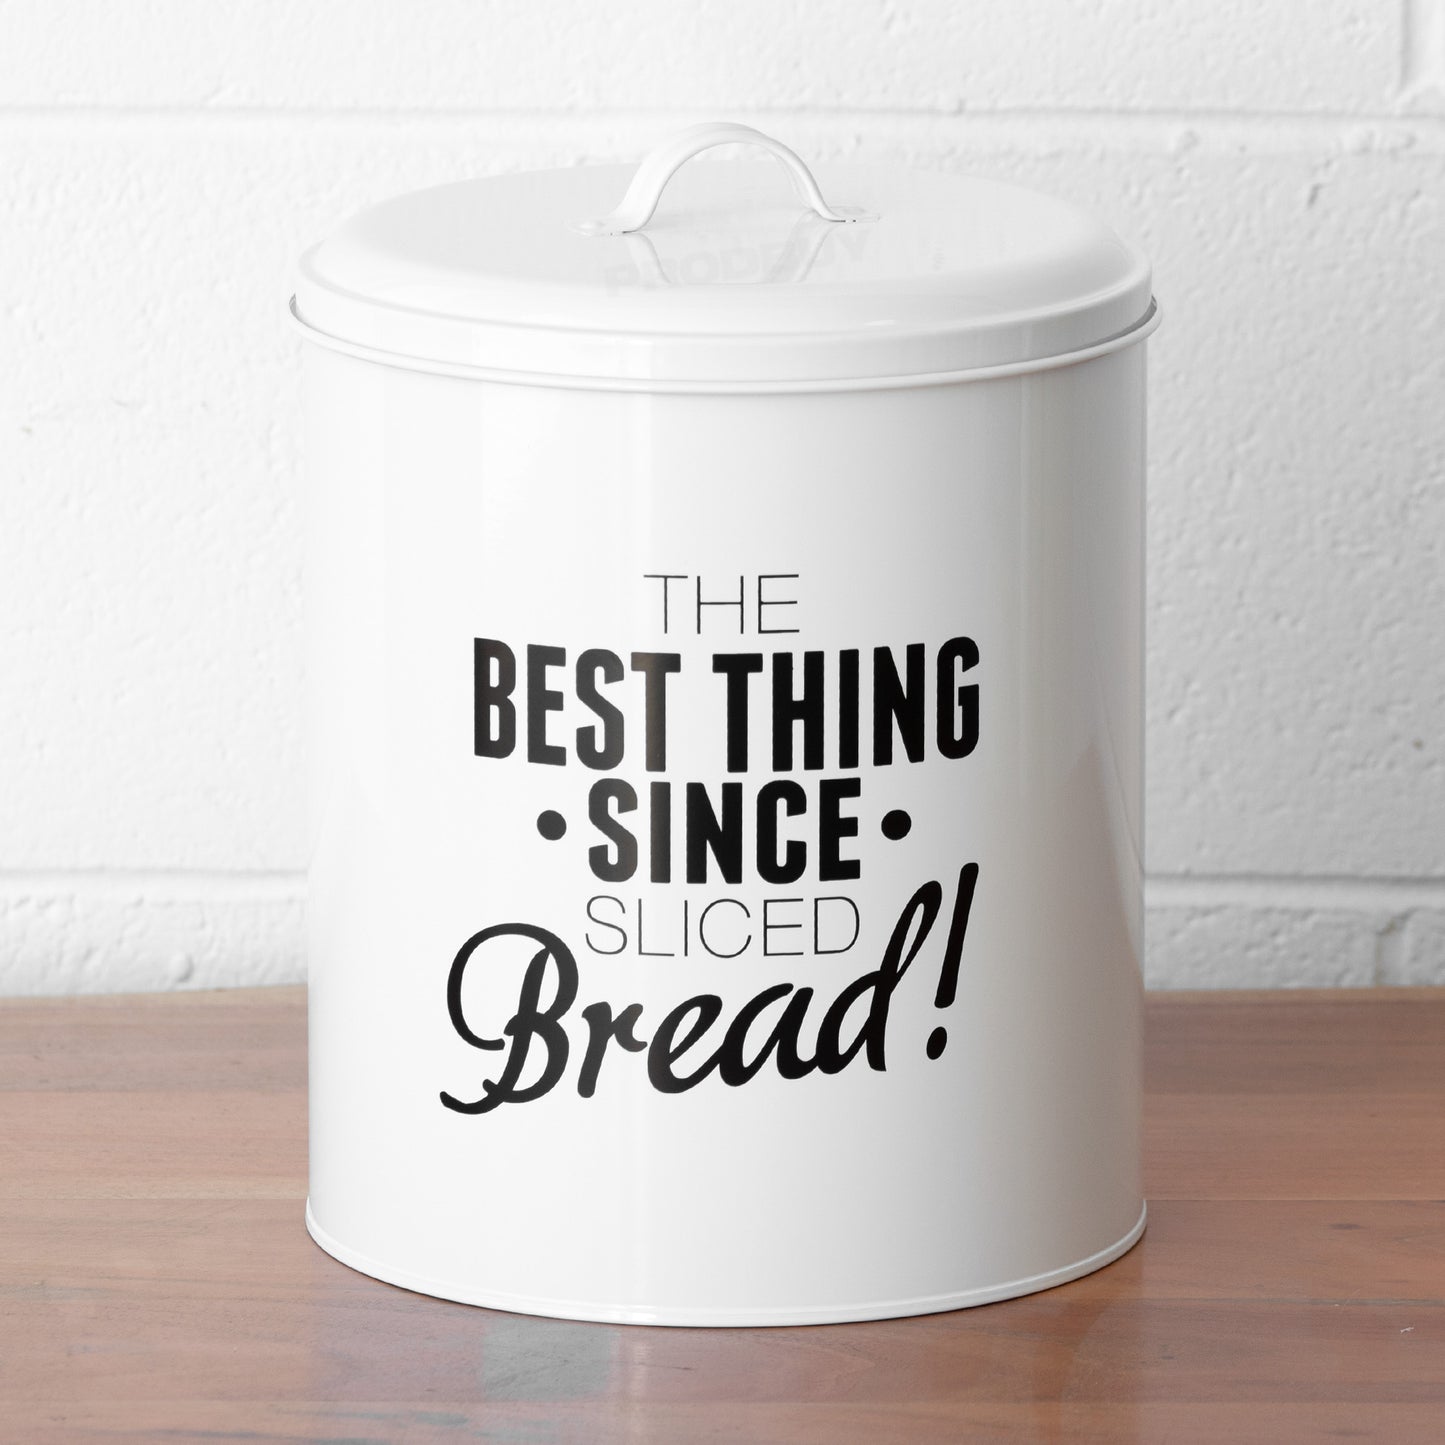 'Best Thing Since Sliced Bread' White Metal Storage Bin Crock